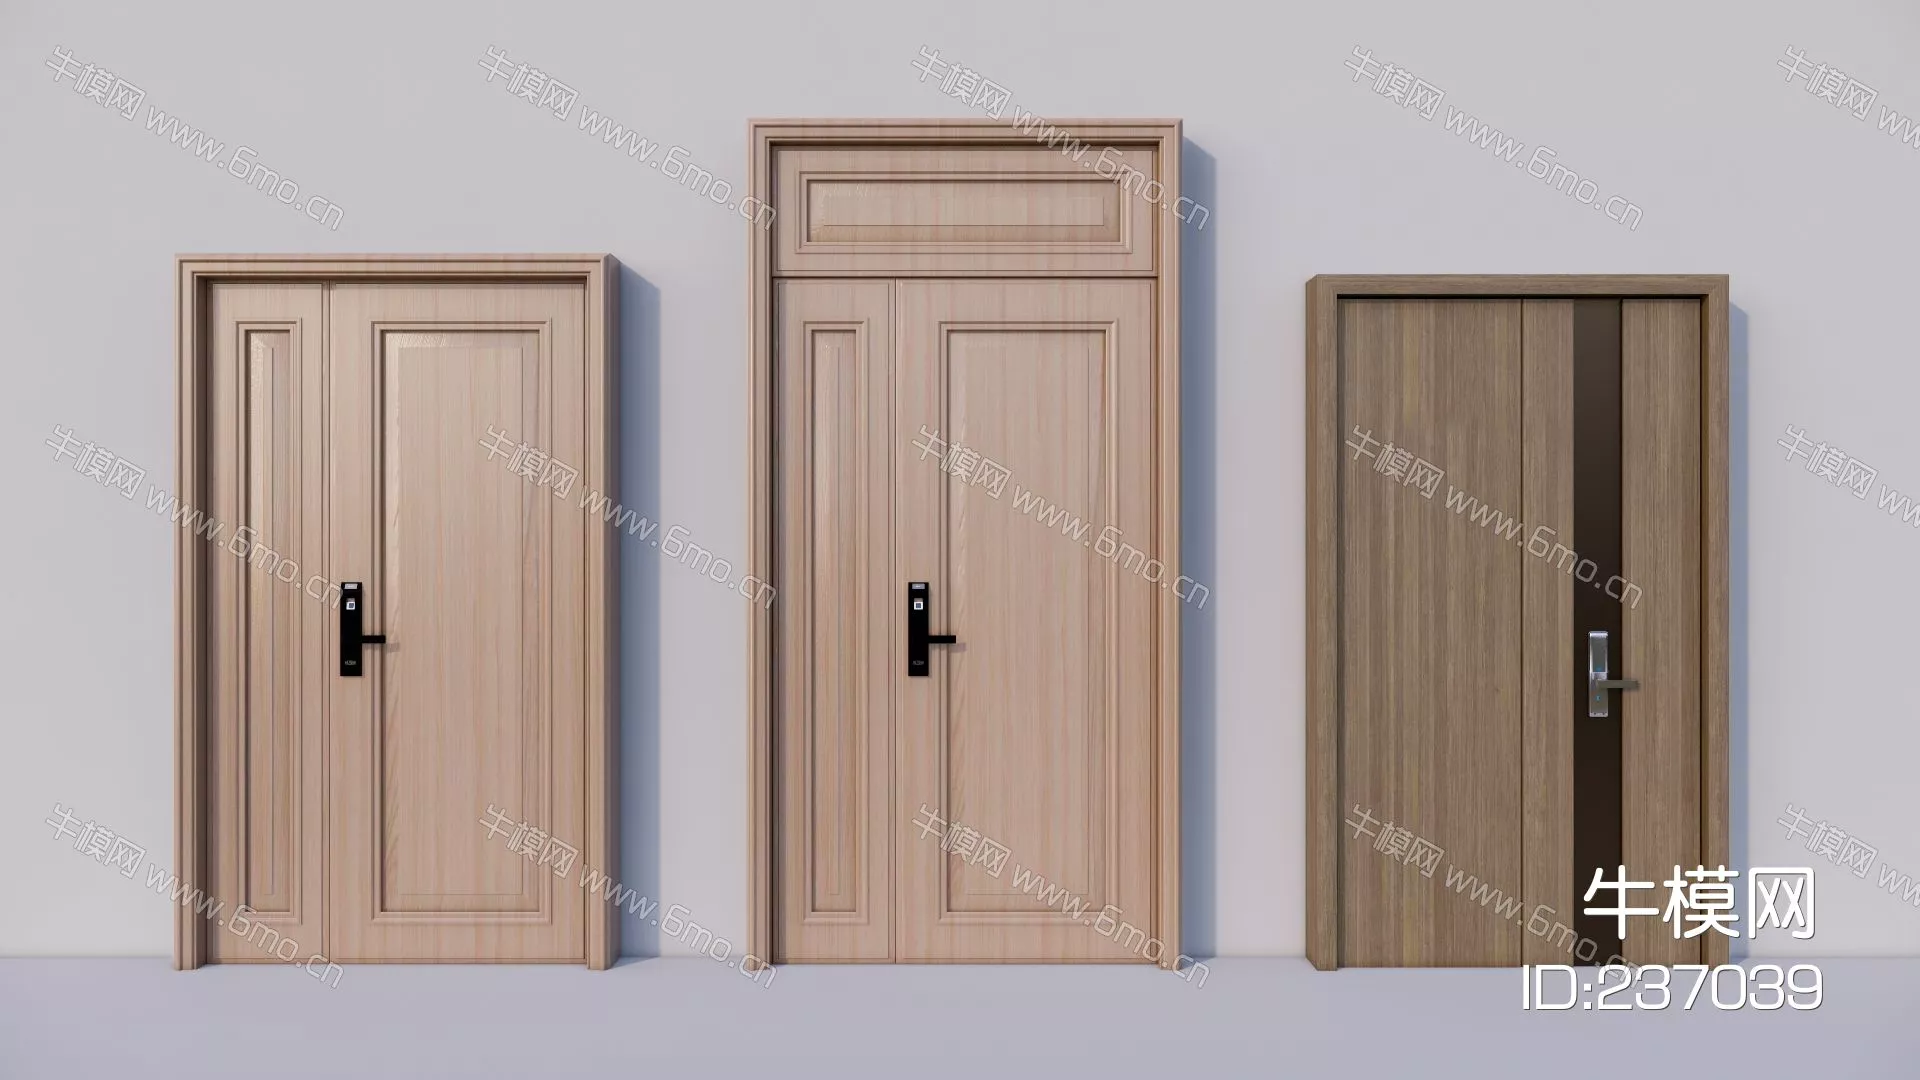 MODERN DOOR AND WINDOWS - SKETCHUP 3D MODEL - ENSCAPE - 237039